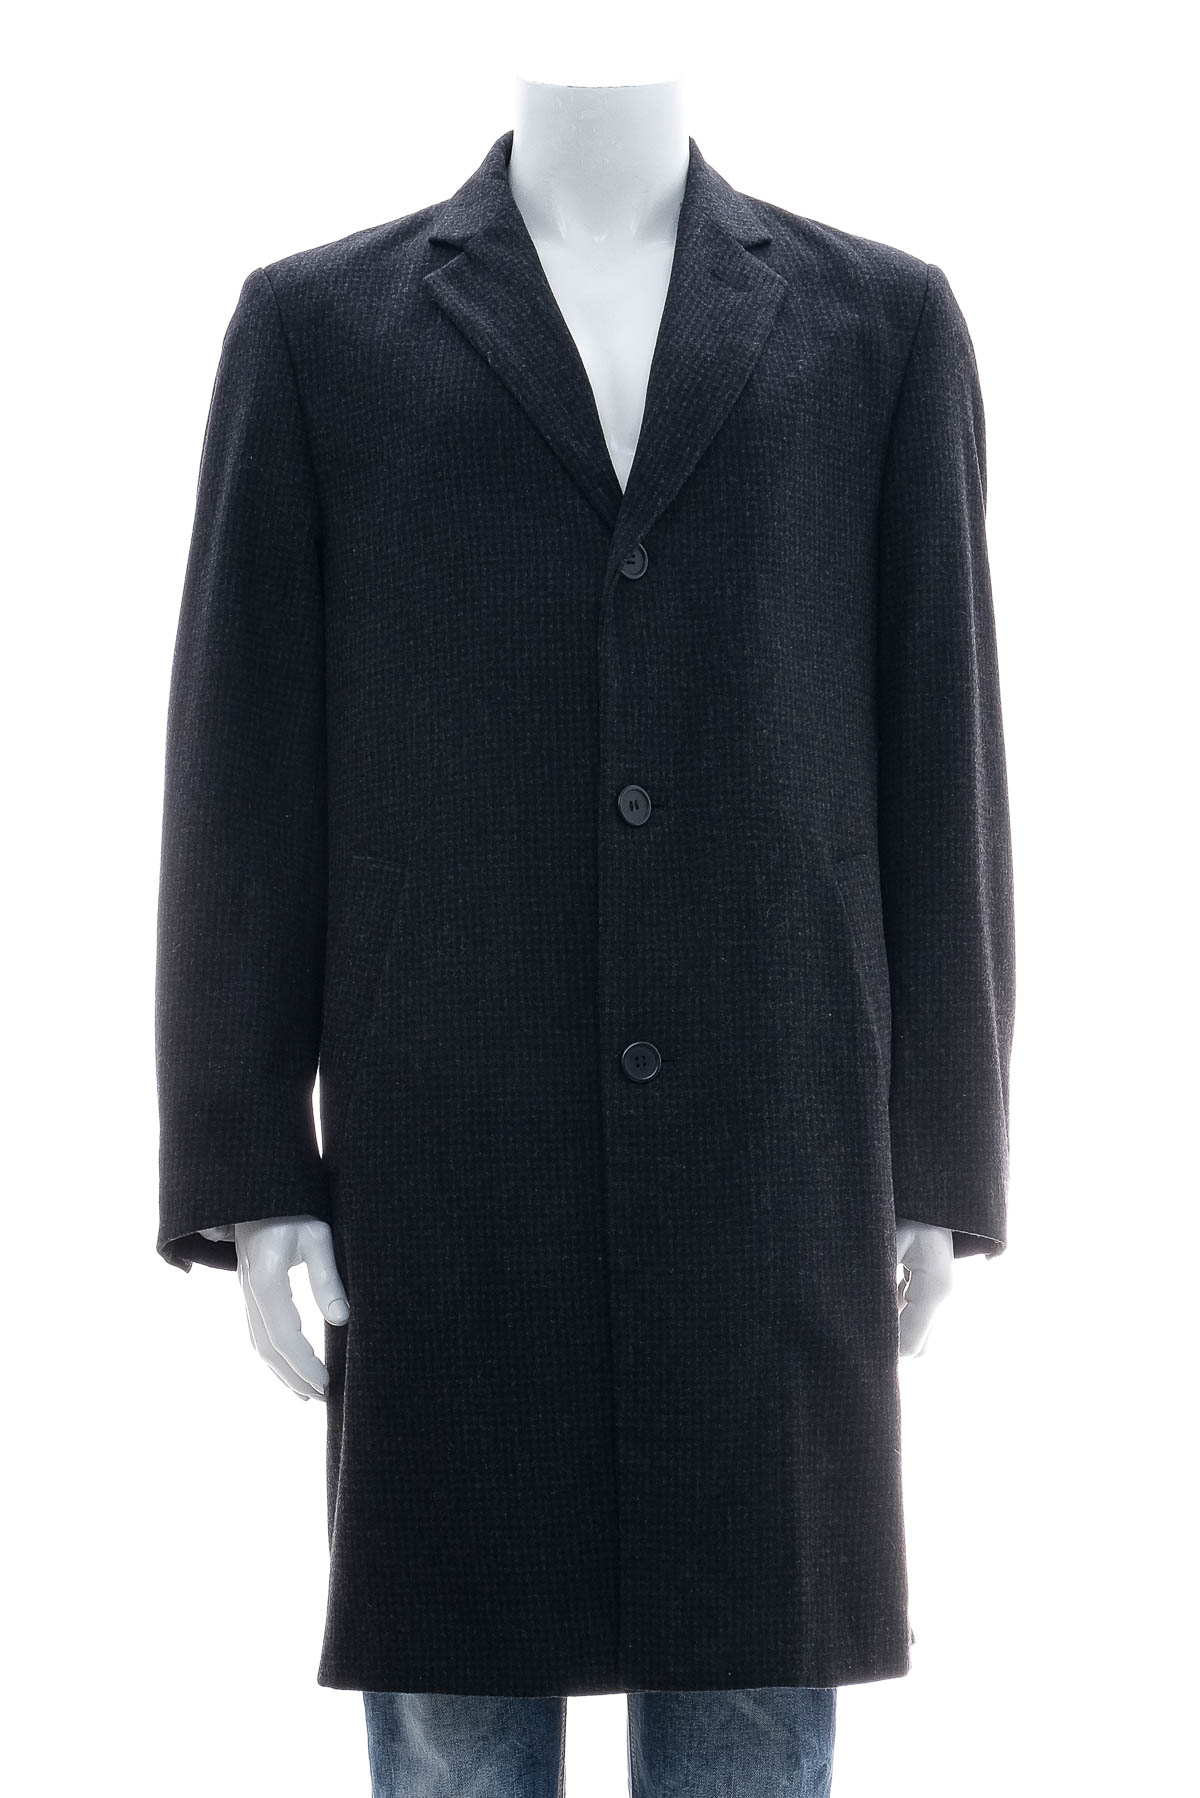 Men's coat - Paul R. Smith - 0